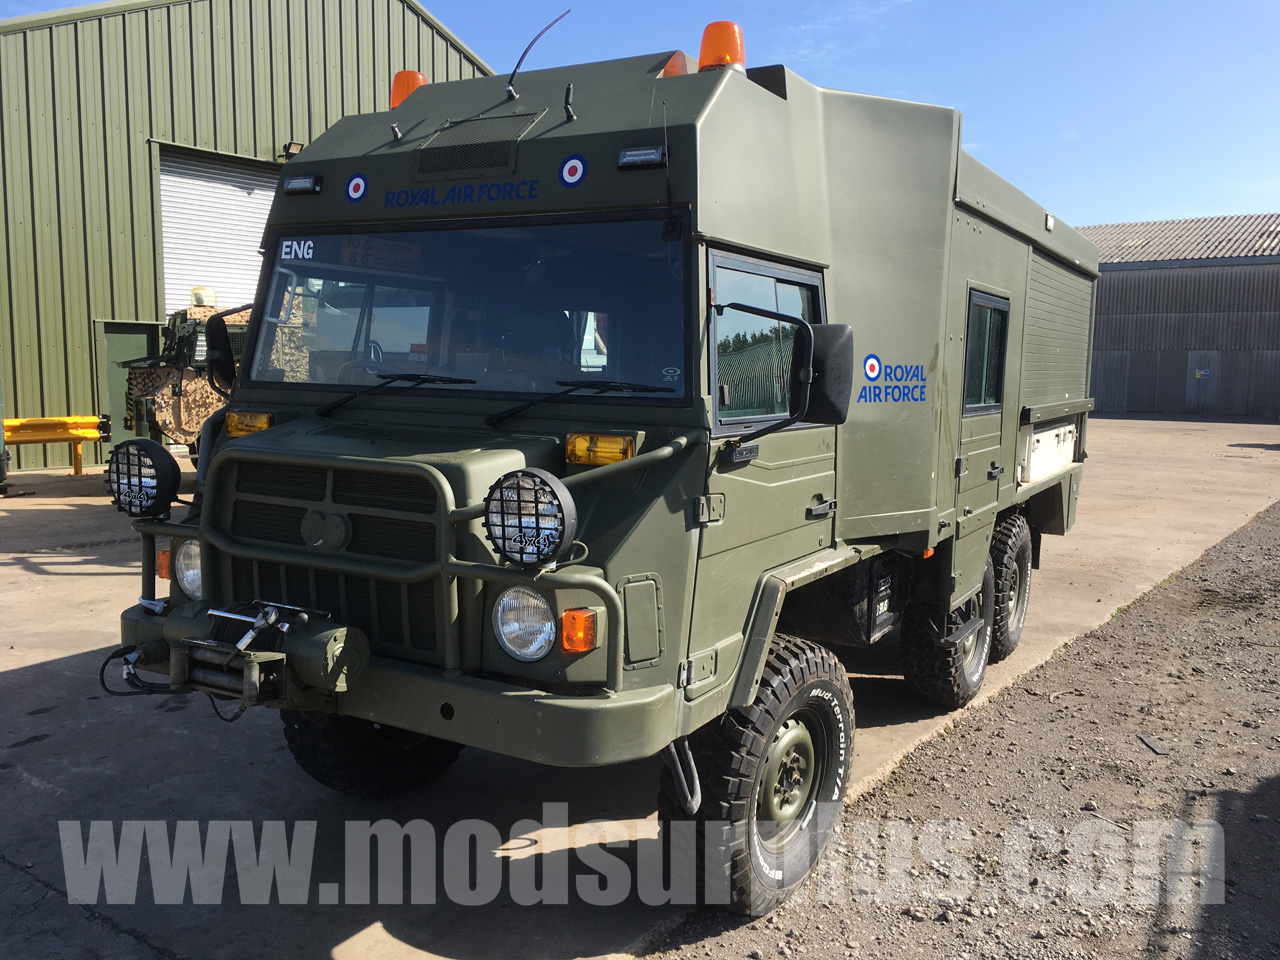 Pinzgauer 718 MK 6x6 RHD Crew Cab Utility - ex military vehicles for sale, mod surplus